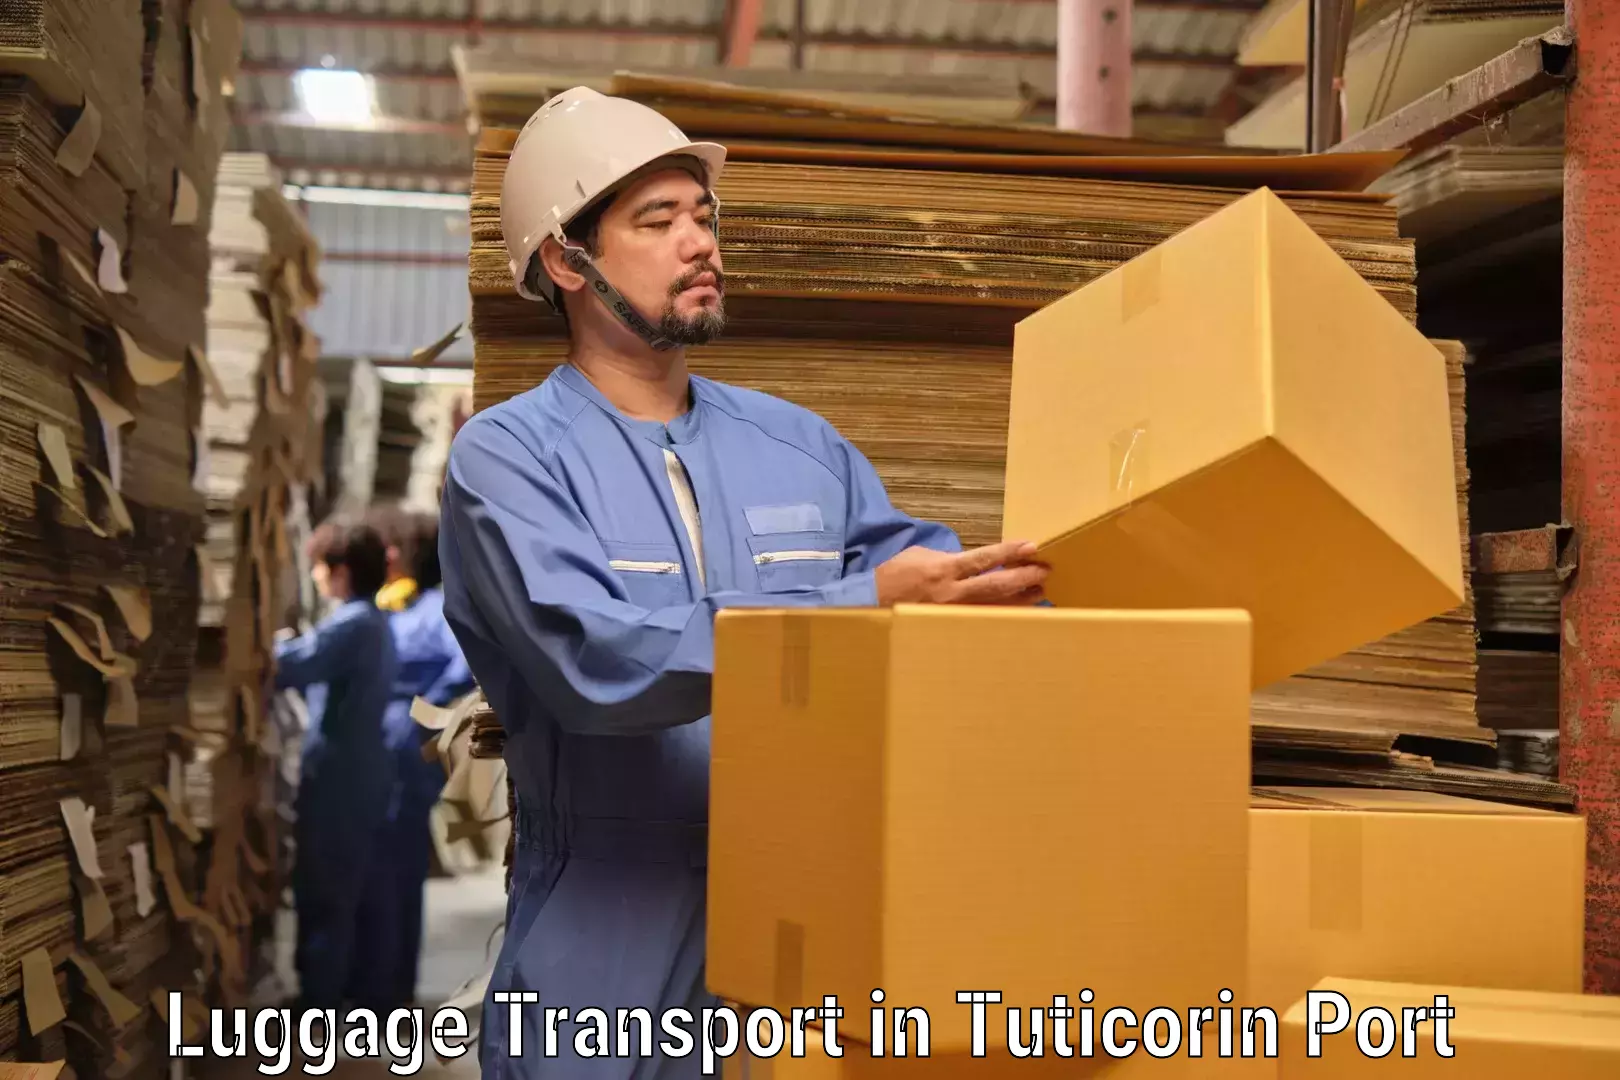 Luggage transport consultancy in Tuticorin Port